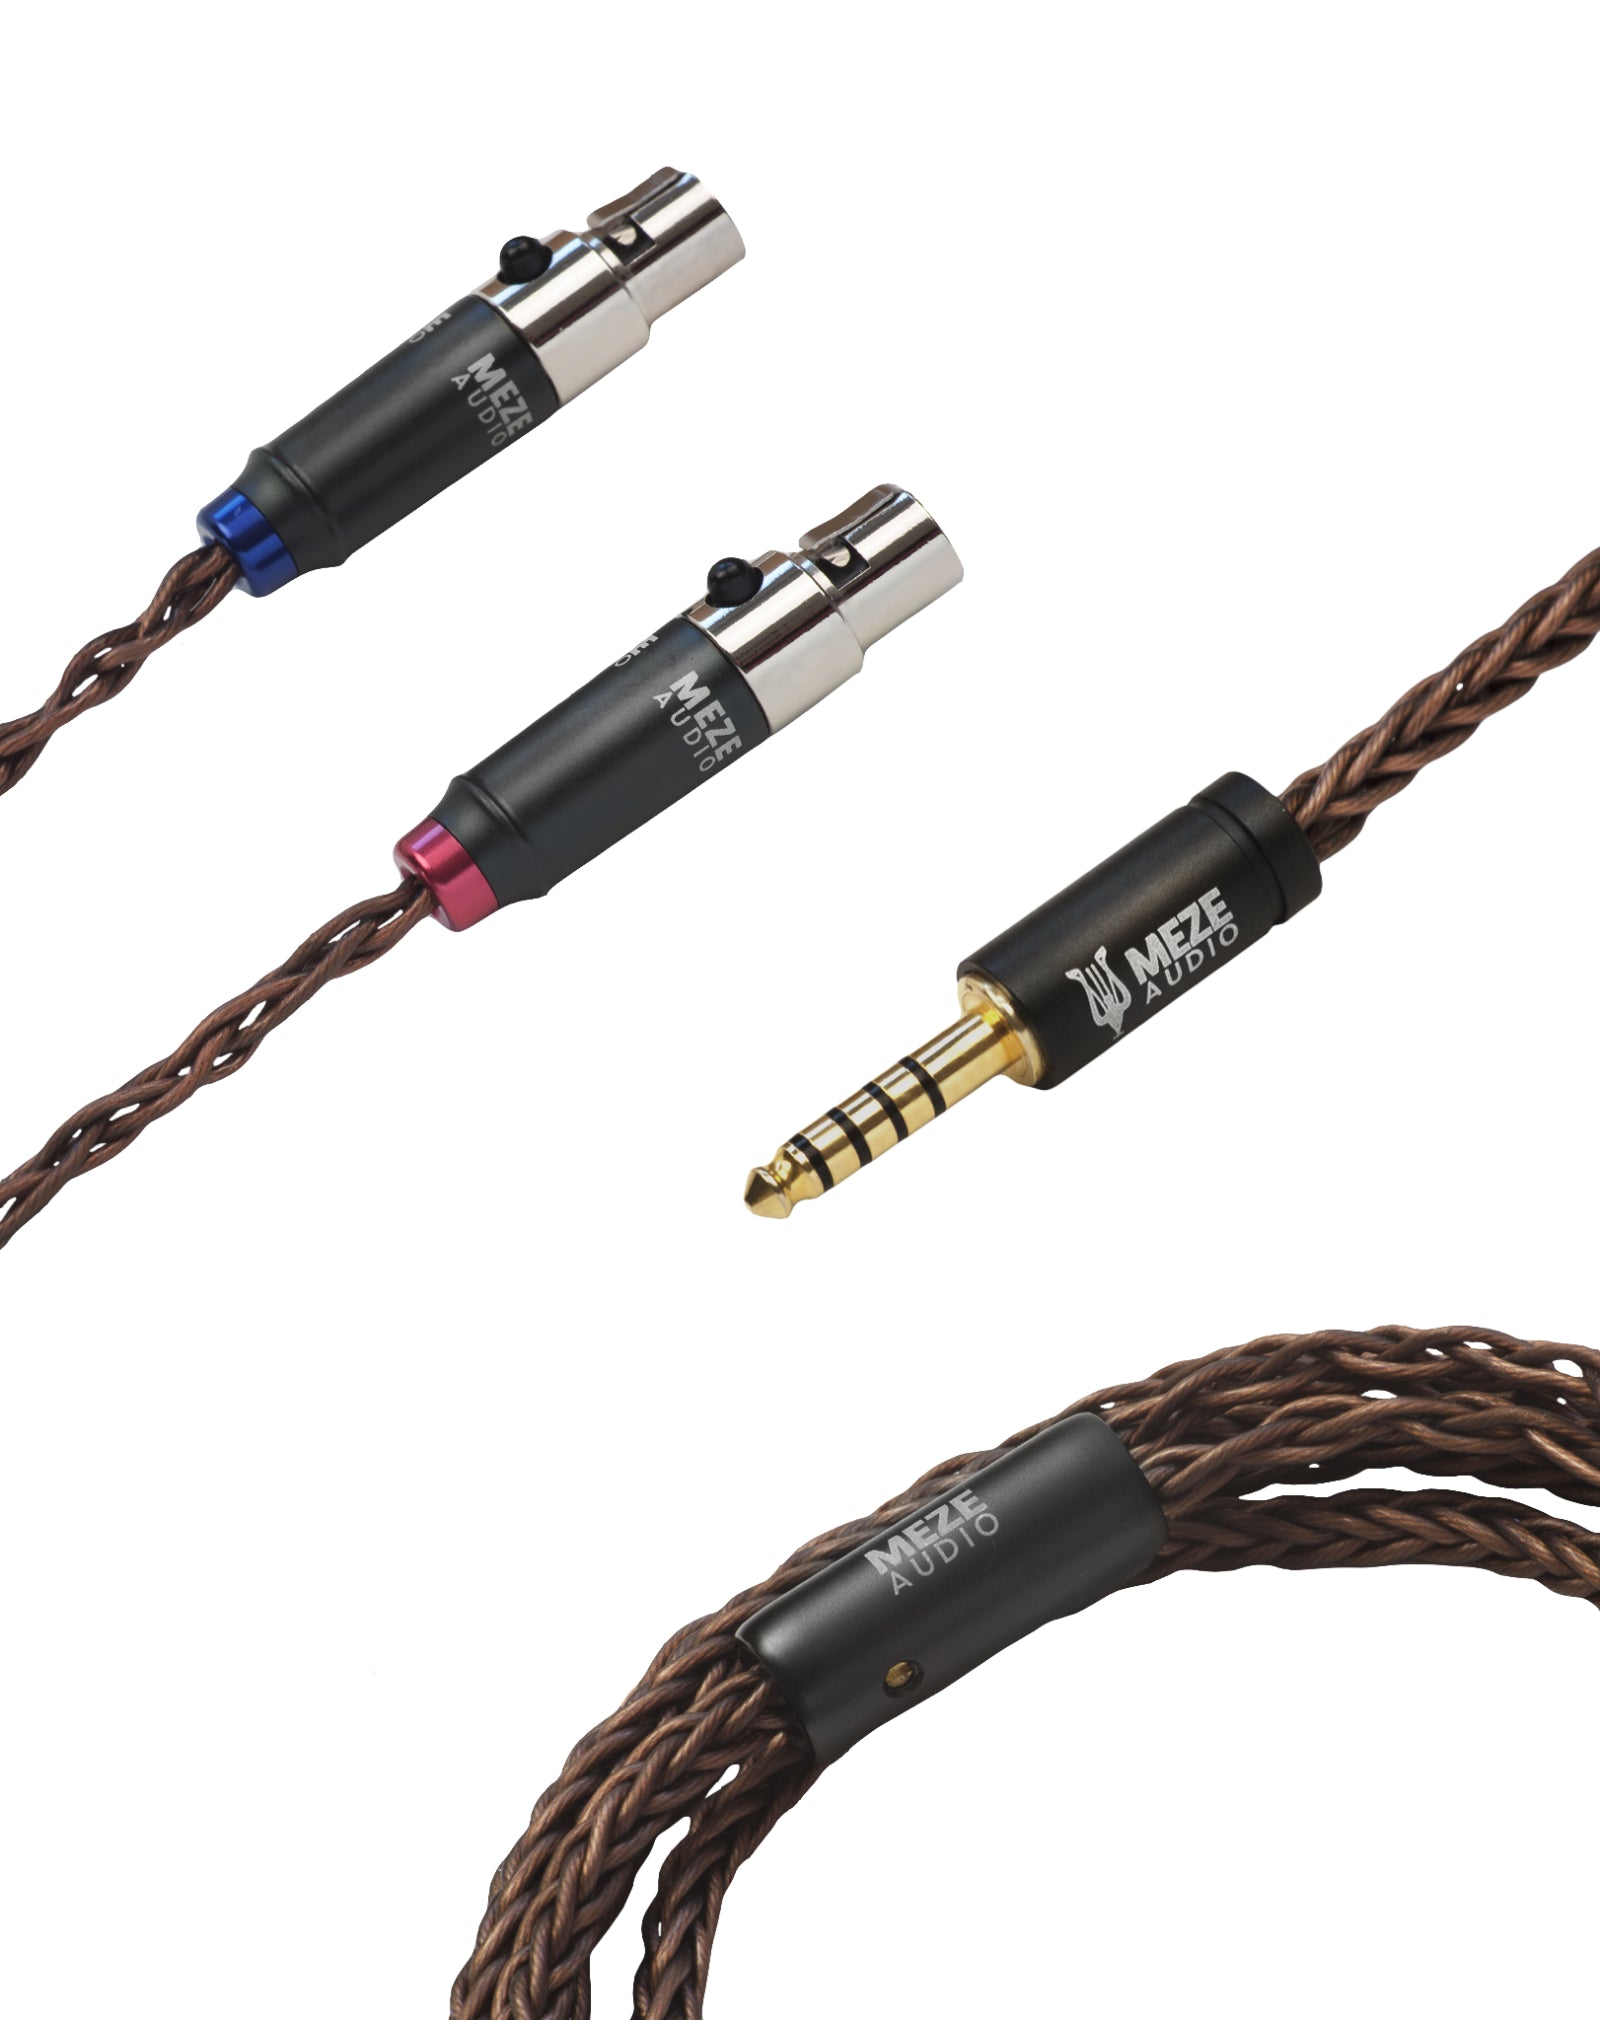 Meze Audio MEM-C4.4 upgrade cable